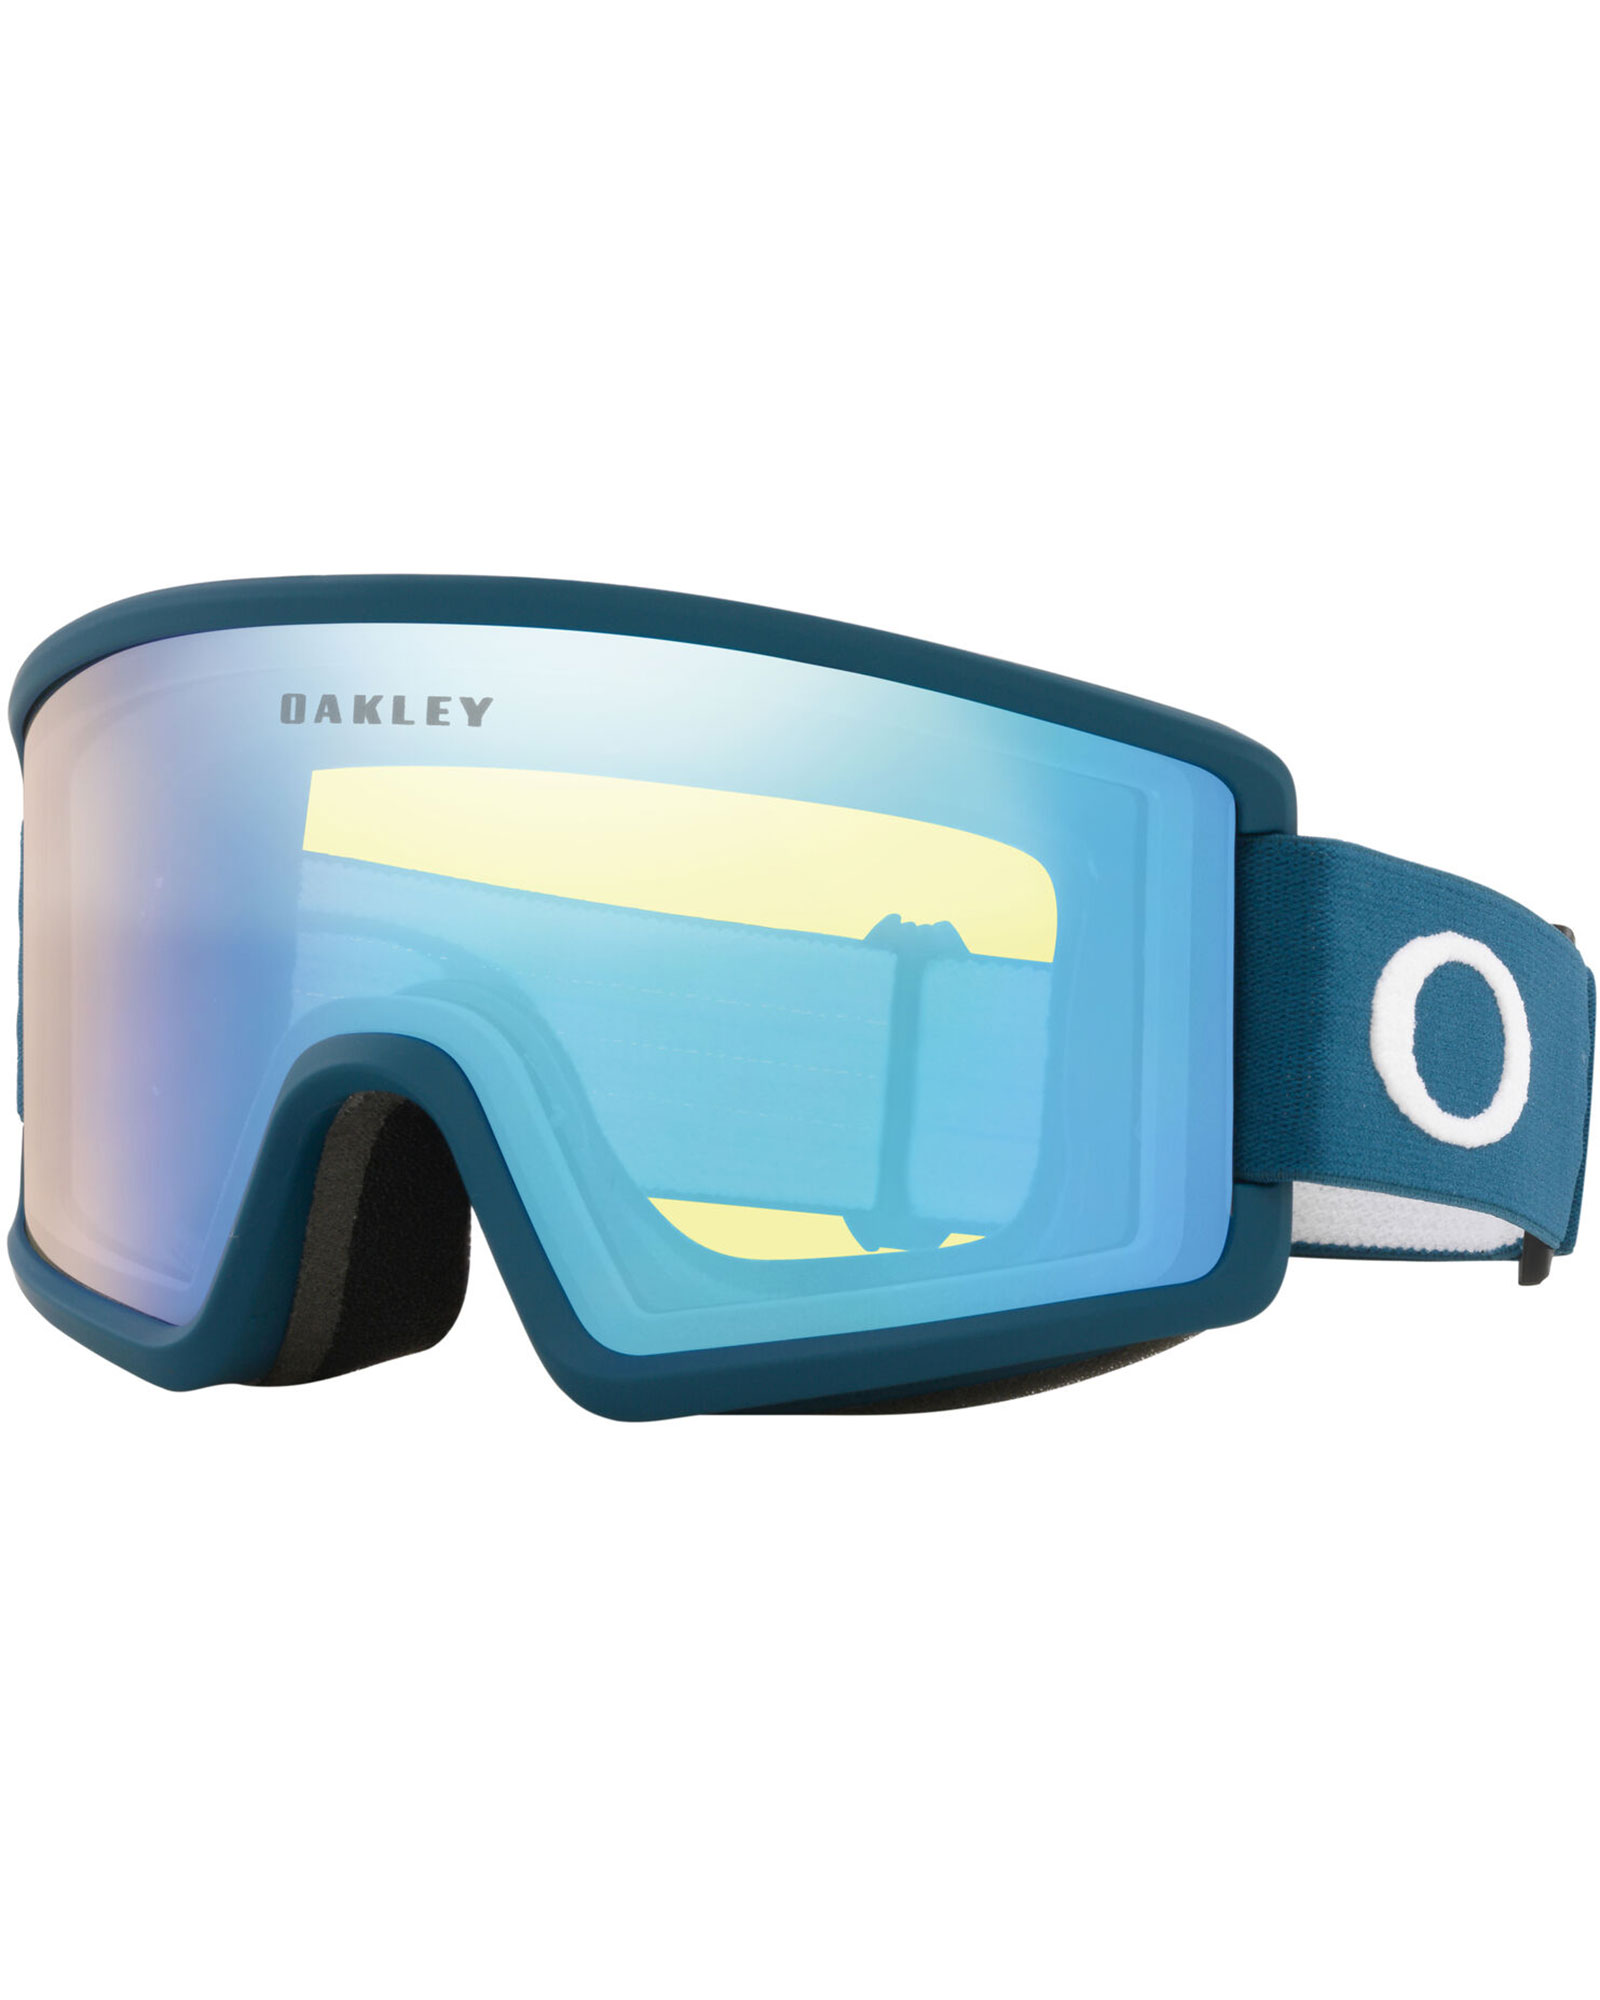 Oakley Target Line L Matte Poseidon / High Intensity Yellow Goggles - Matte Poseidon